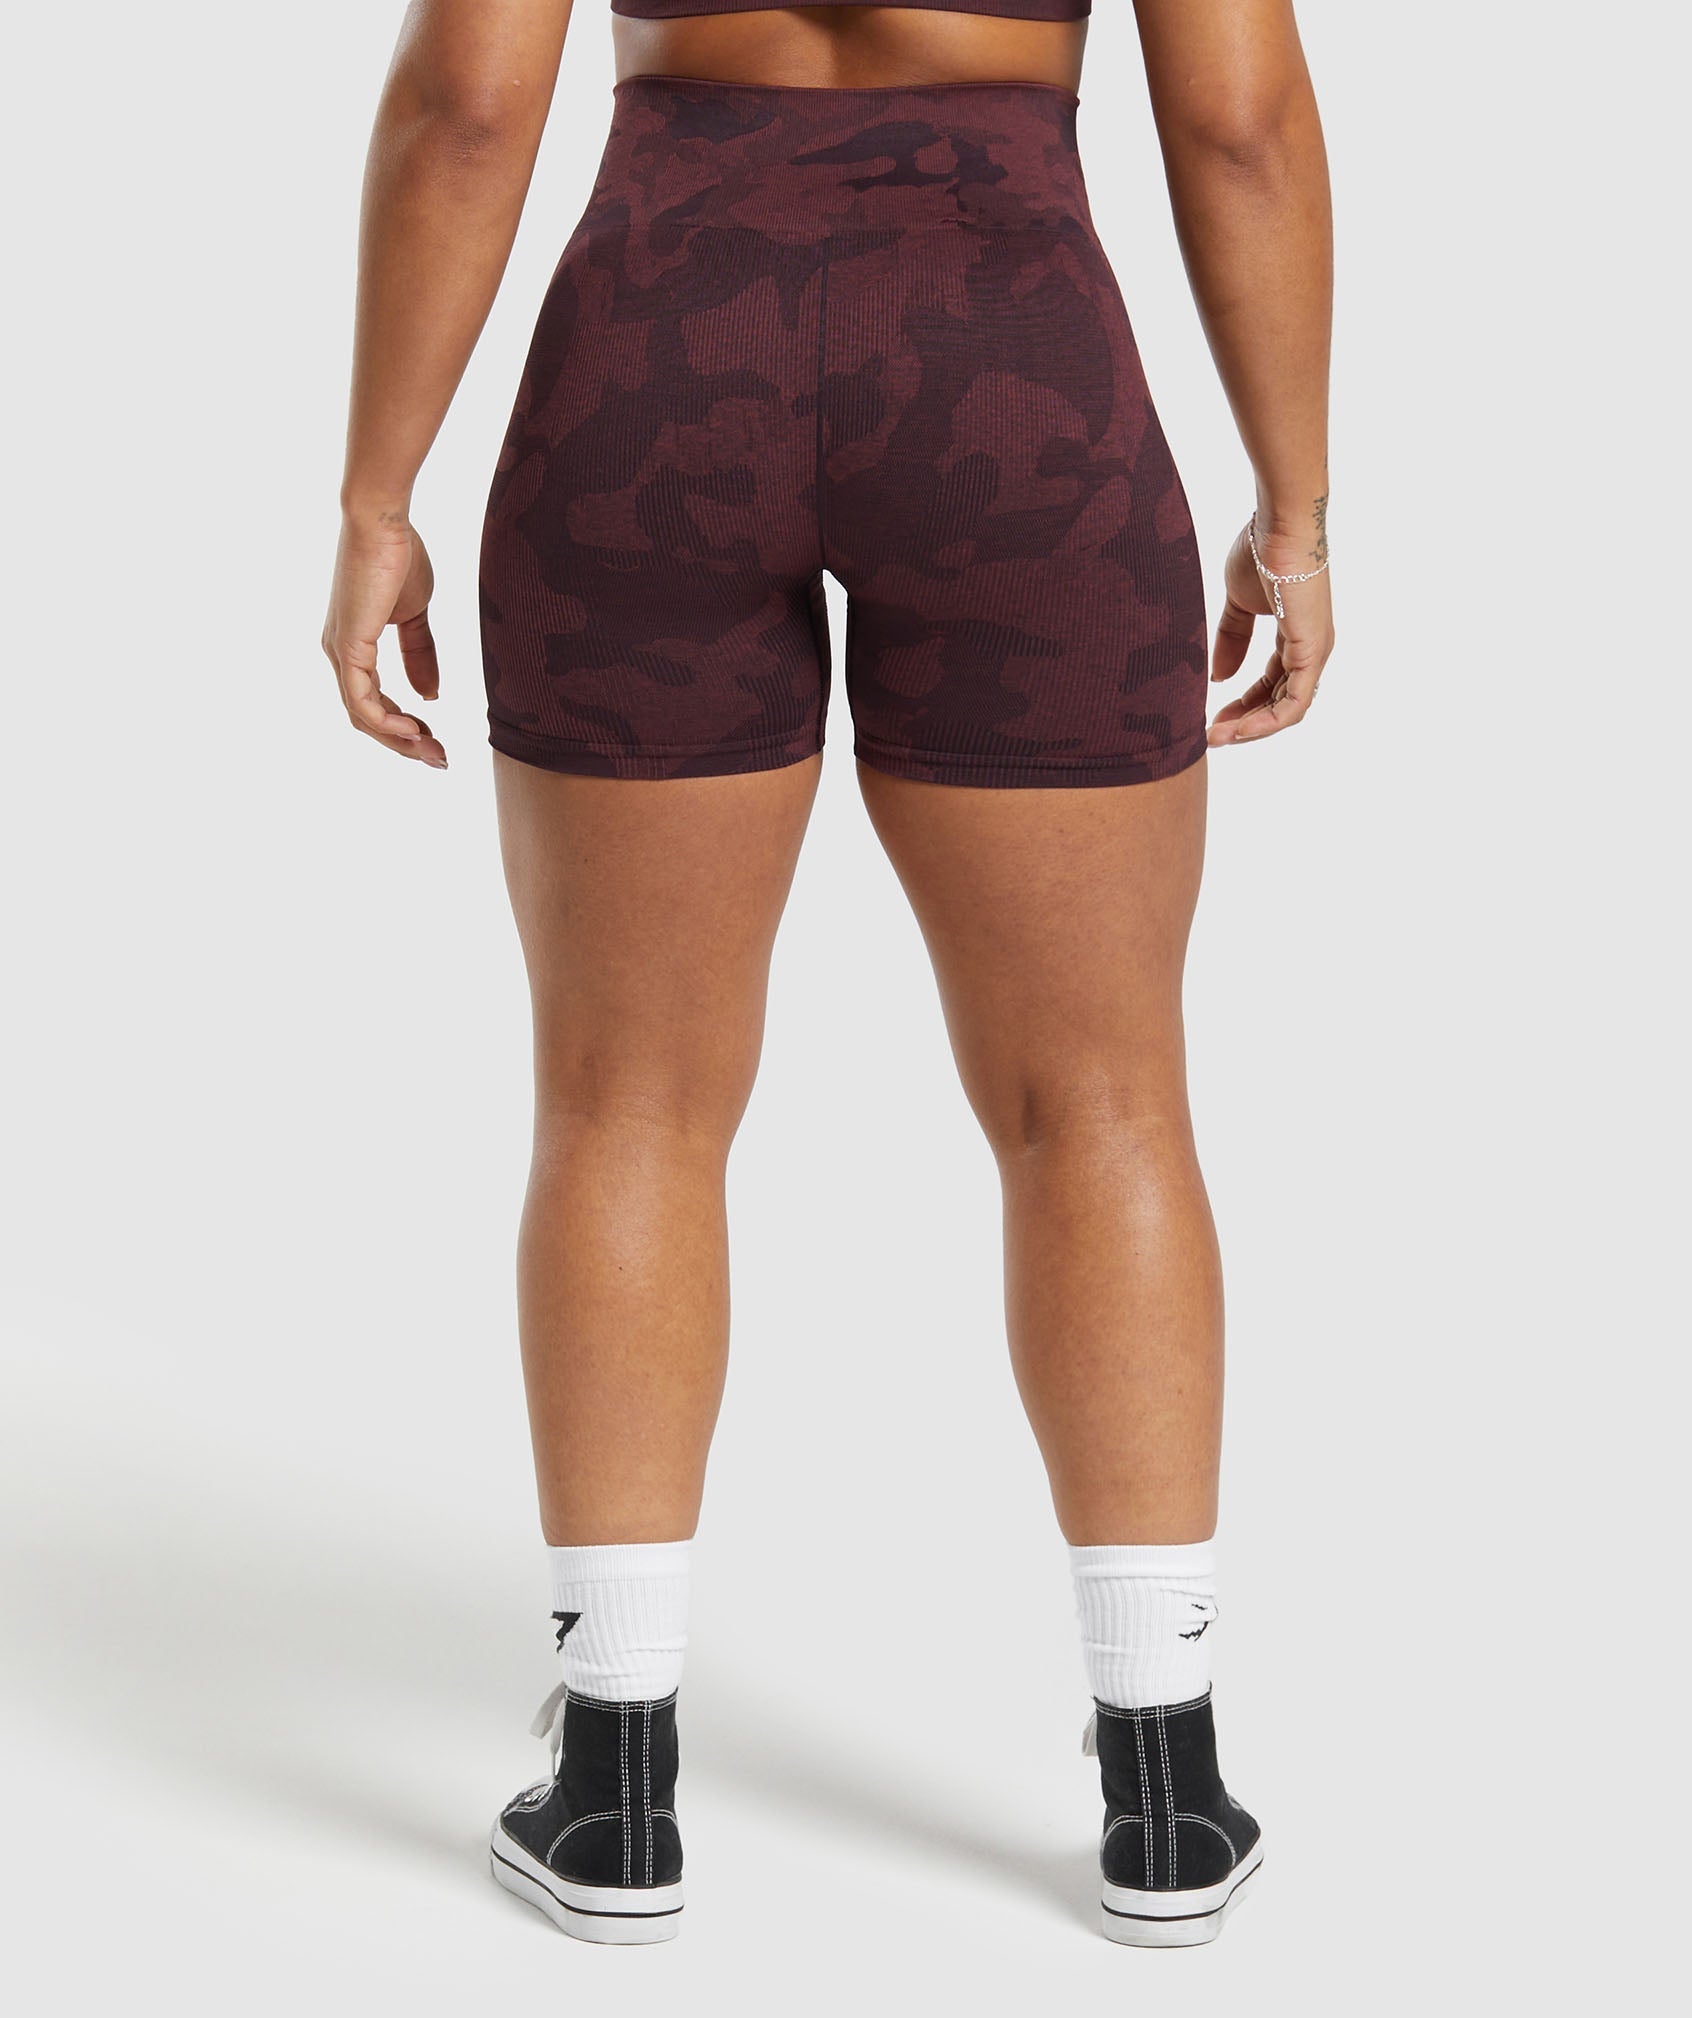 Gymshark Adapt Camo Seamless Shorts - Plum Brown/Burgundy